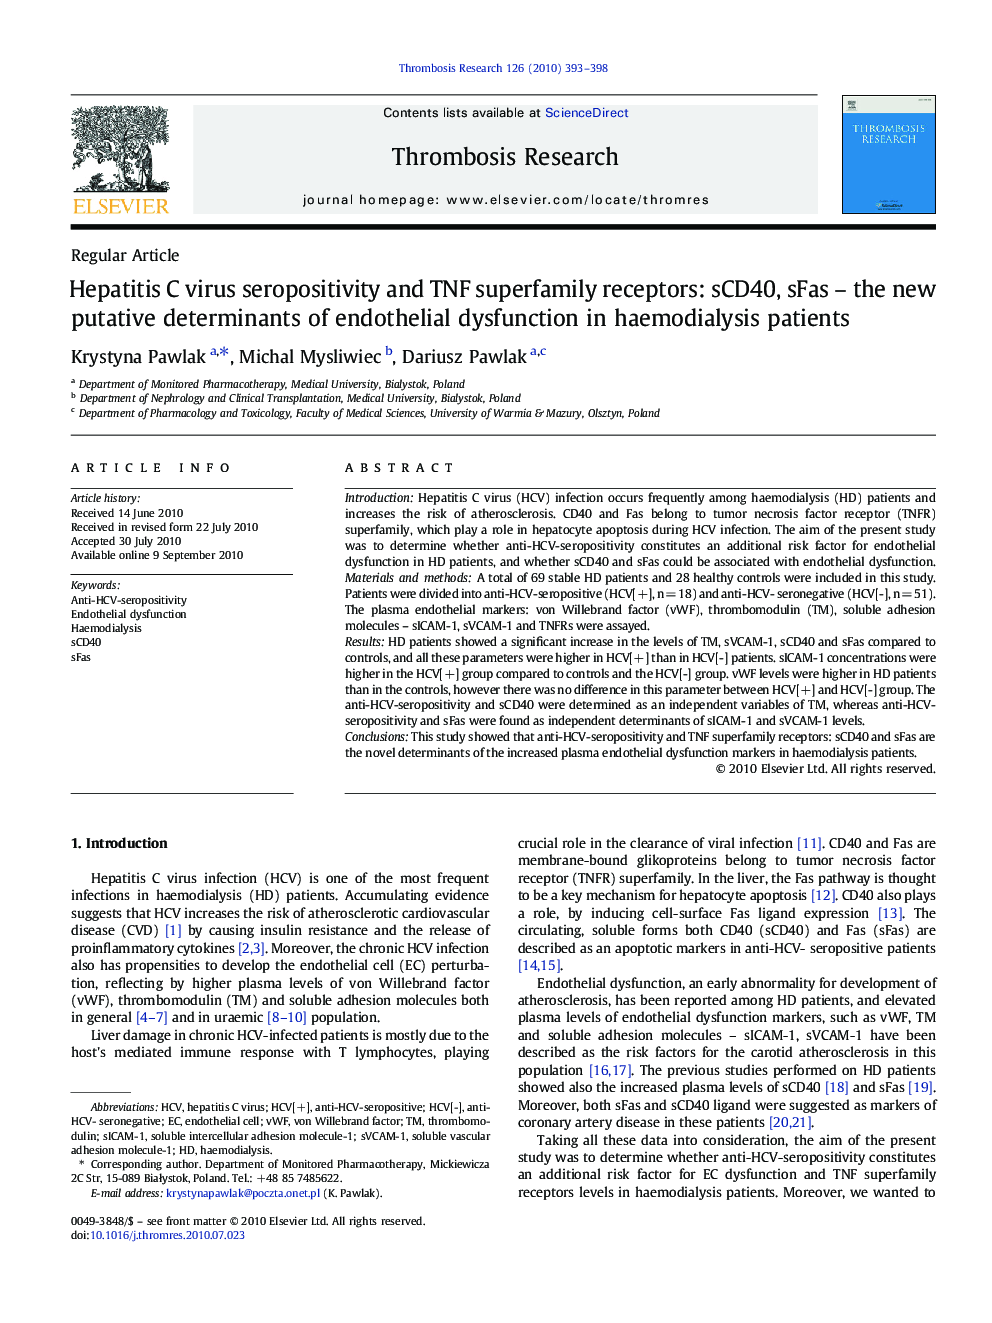 Hepatitis C virus seropositivity and TNF superfamily receptors: sCD40, sFas - the new putative determinants of endothelial dysfunction in haemodialysis patients